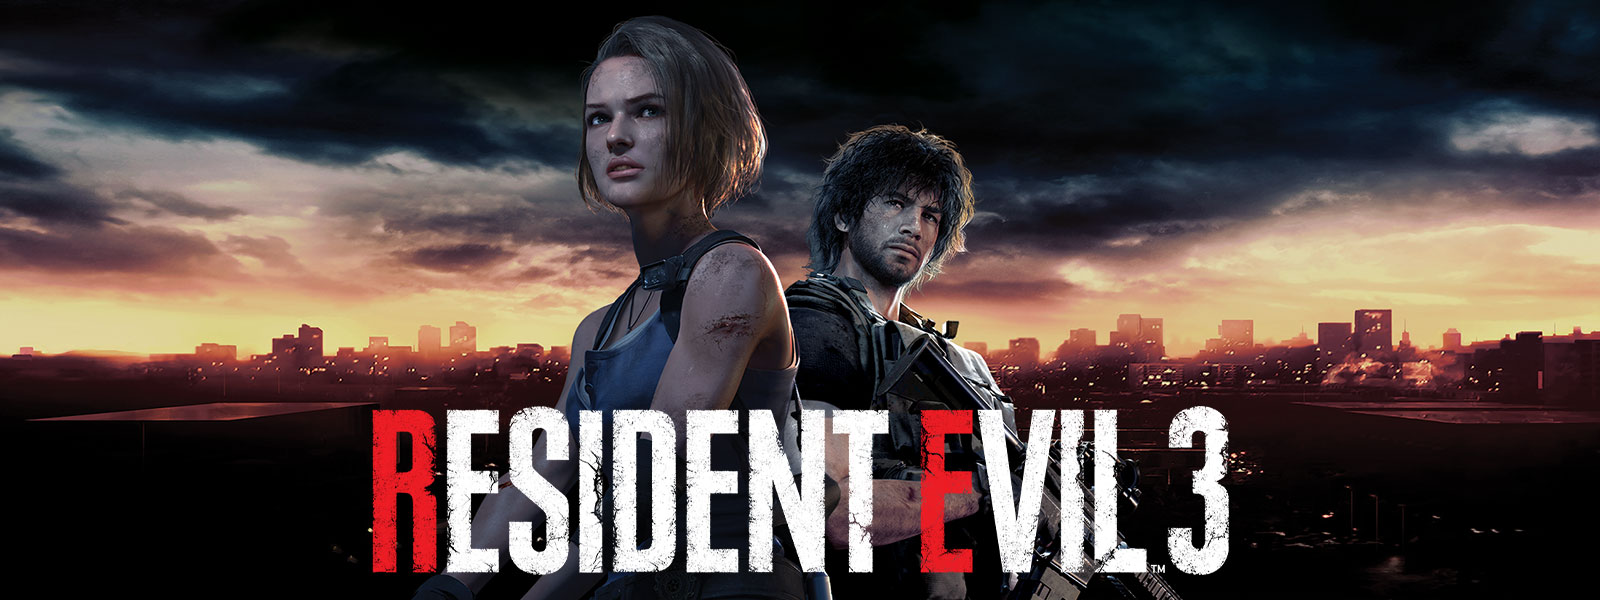 Resident Evil 3, Jill Valentine i Carlos Oliveira stoją z panoramą Raccoon City w tle